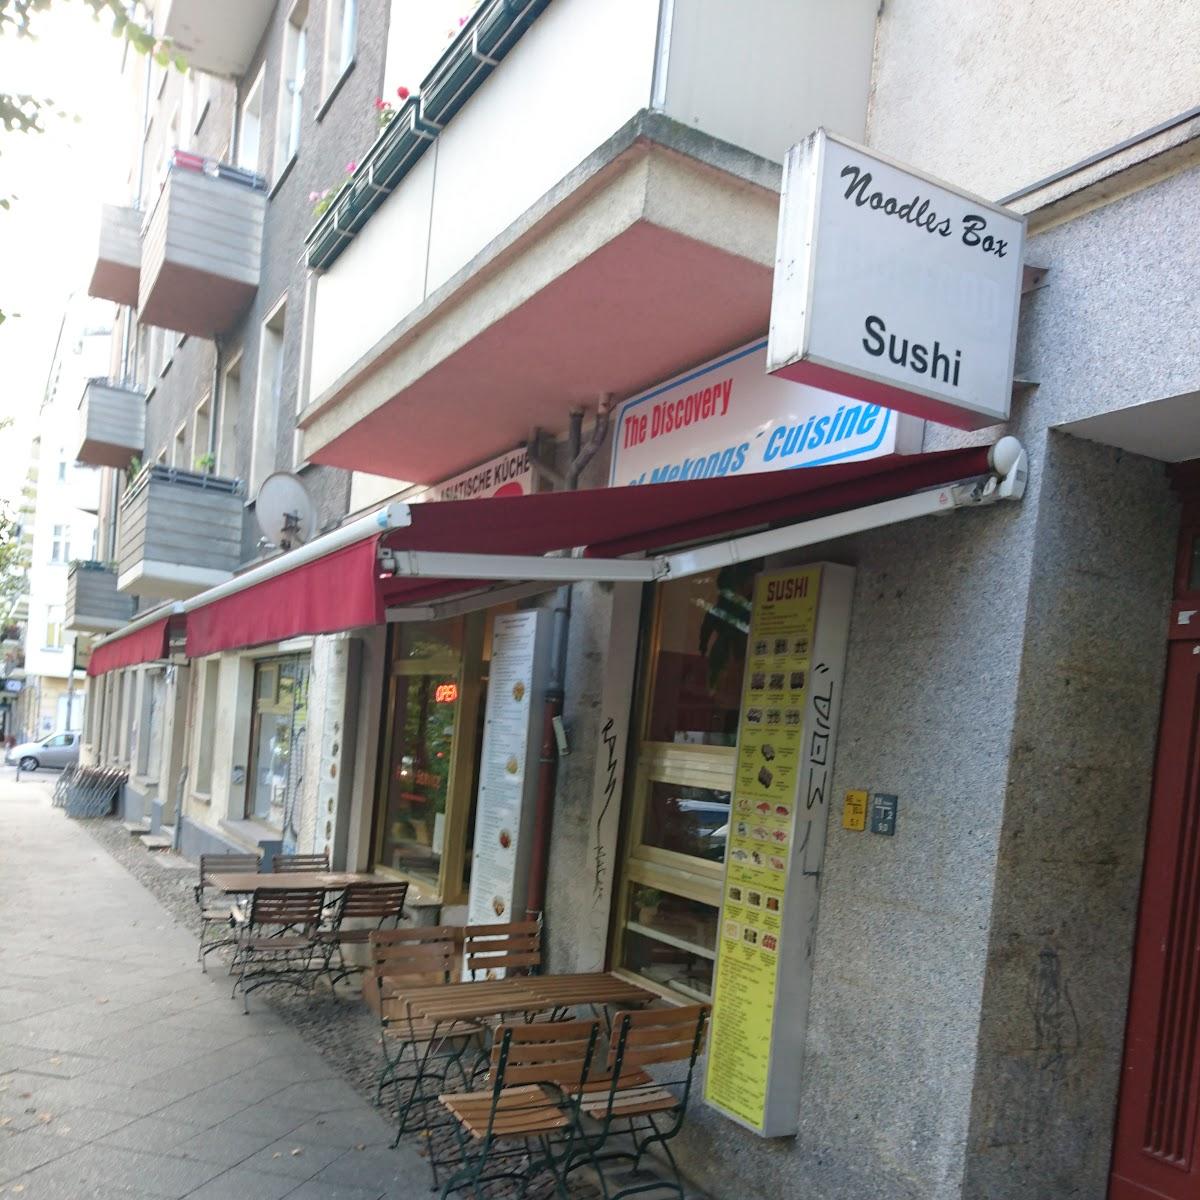 Restaurant "Mekong Küche" in Berlin